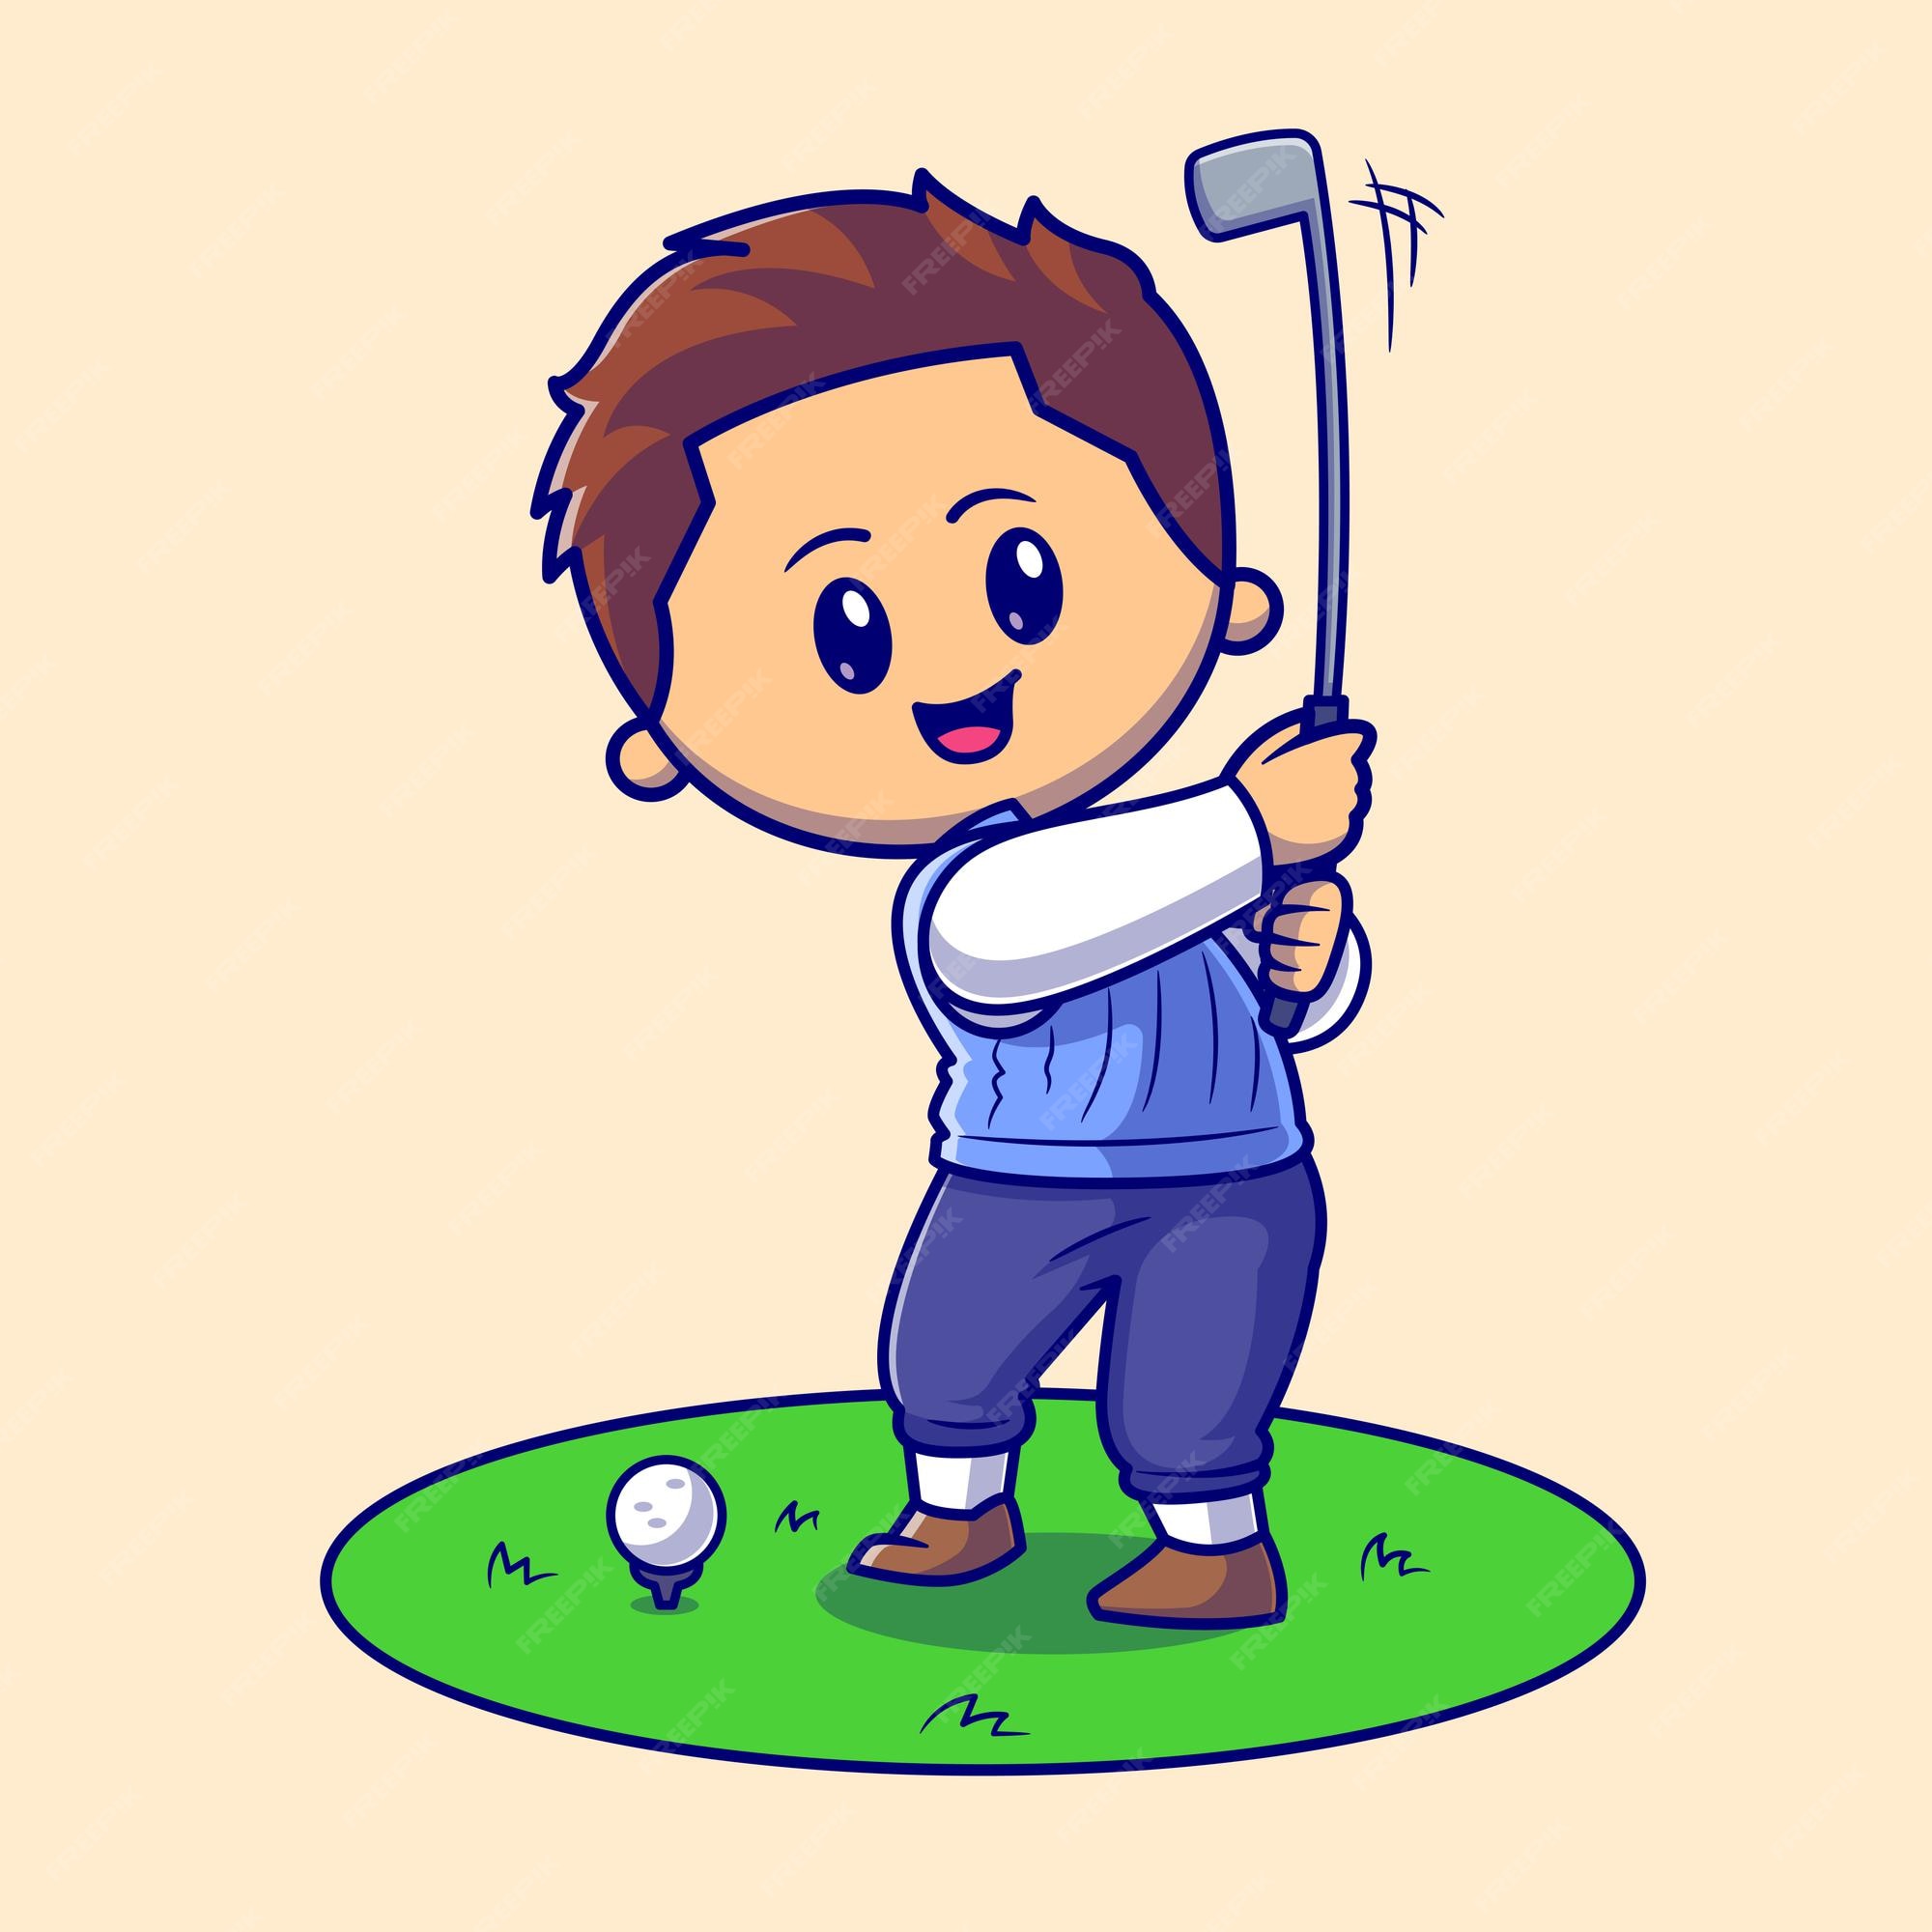 Golf Cartoon Images - Free Download on Freepik